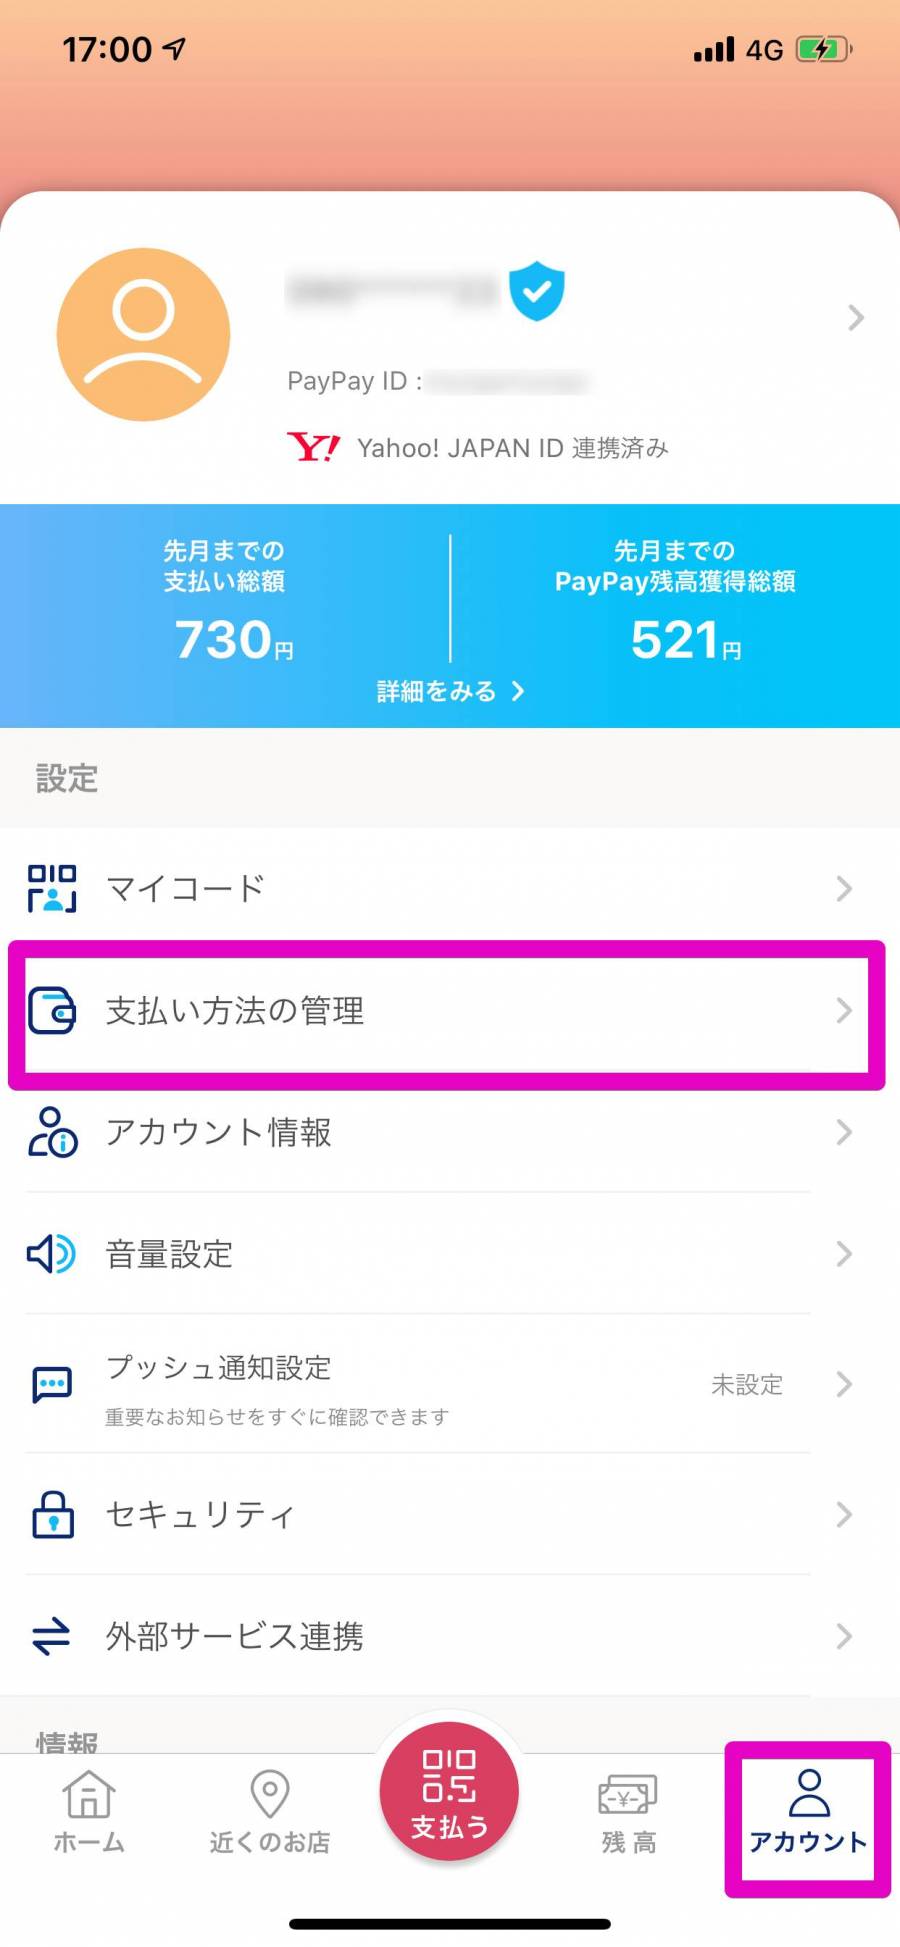 PayPay アカウント